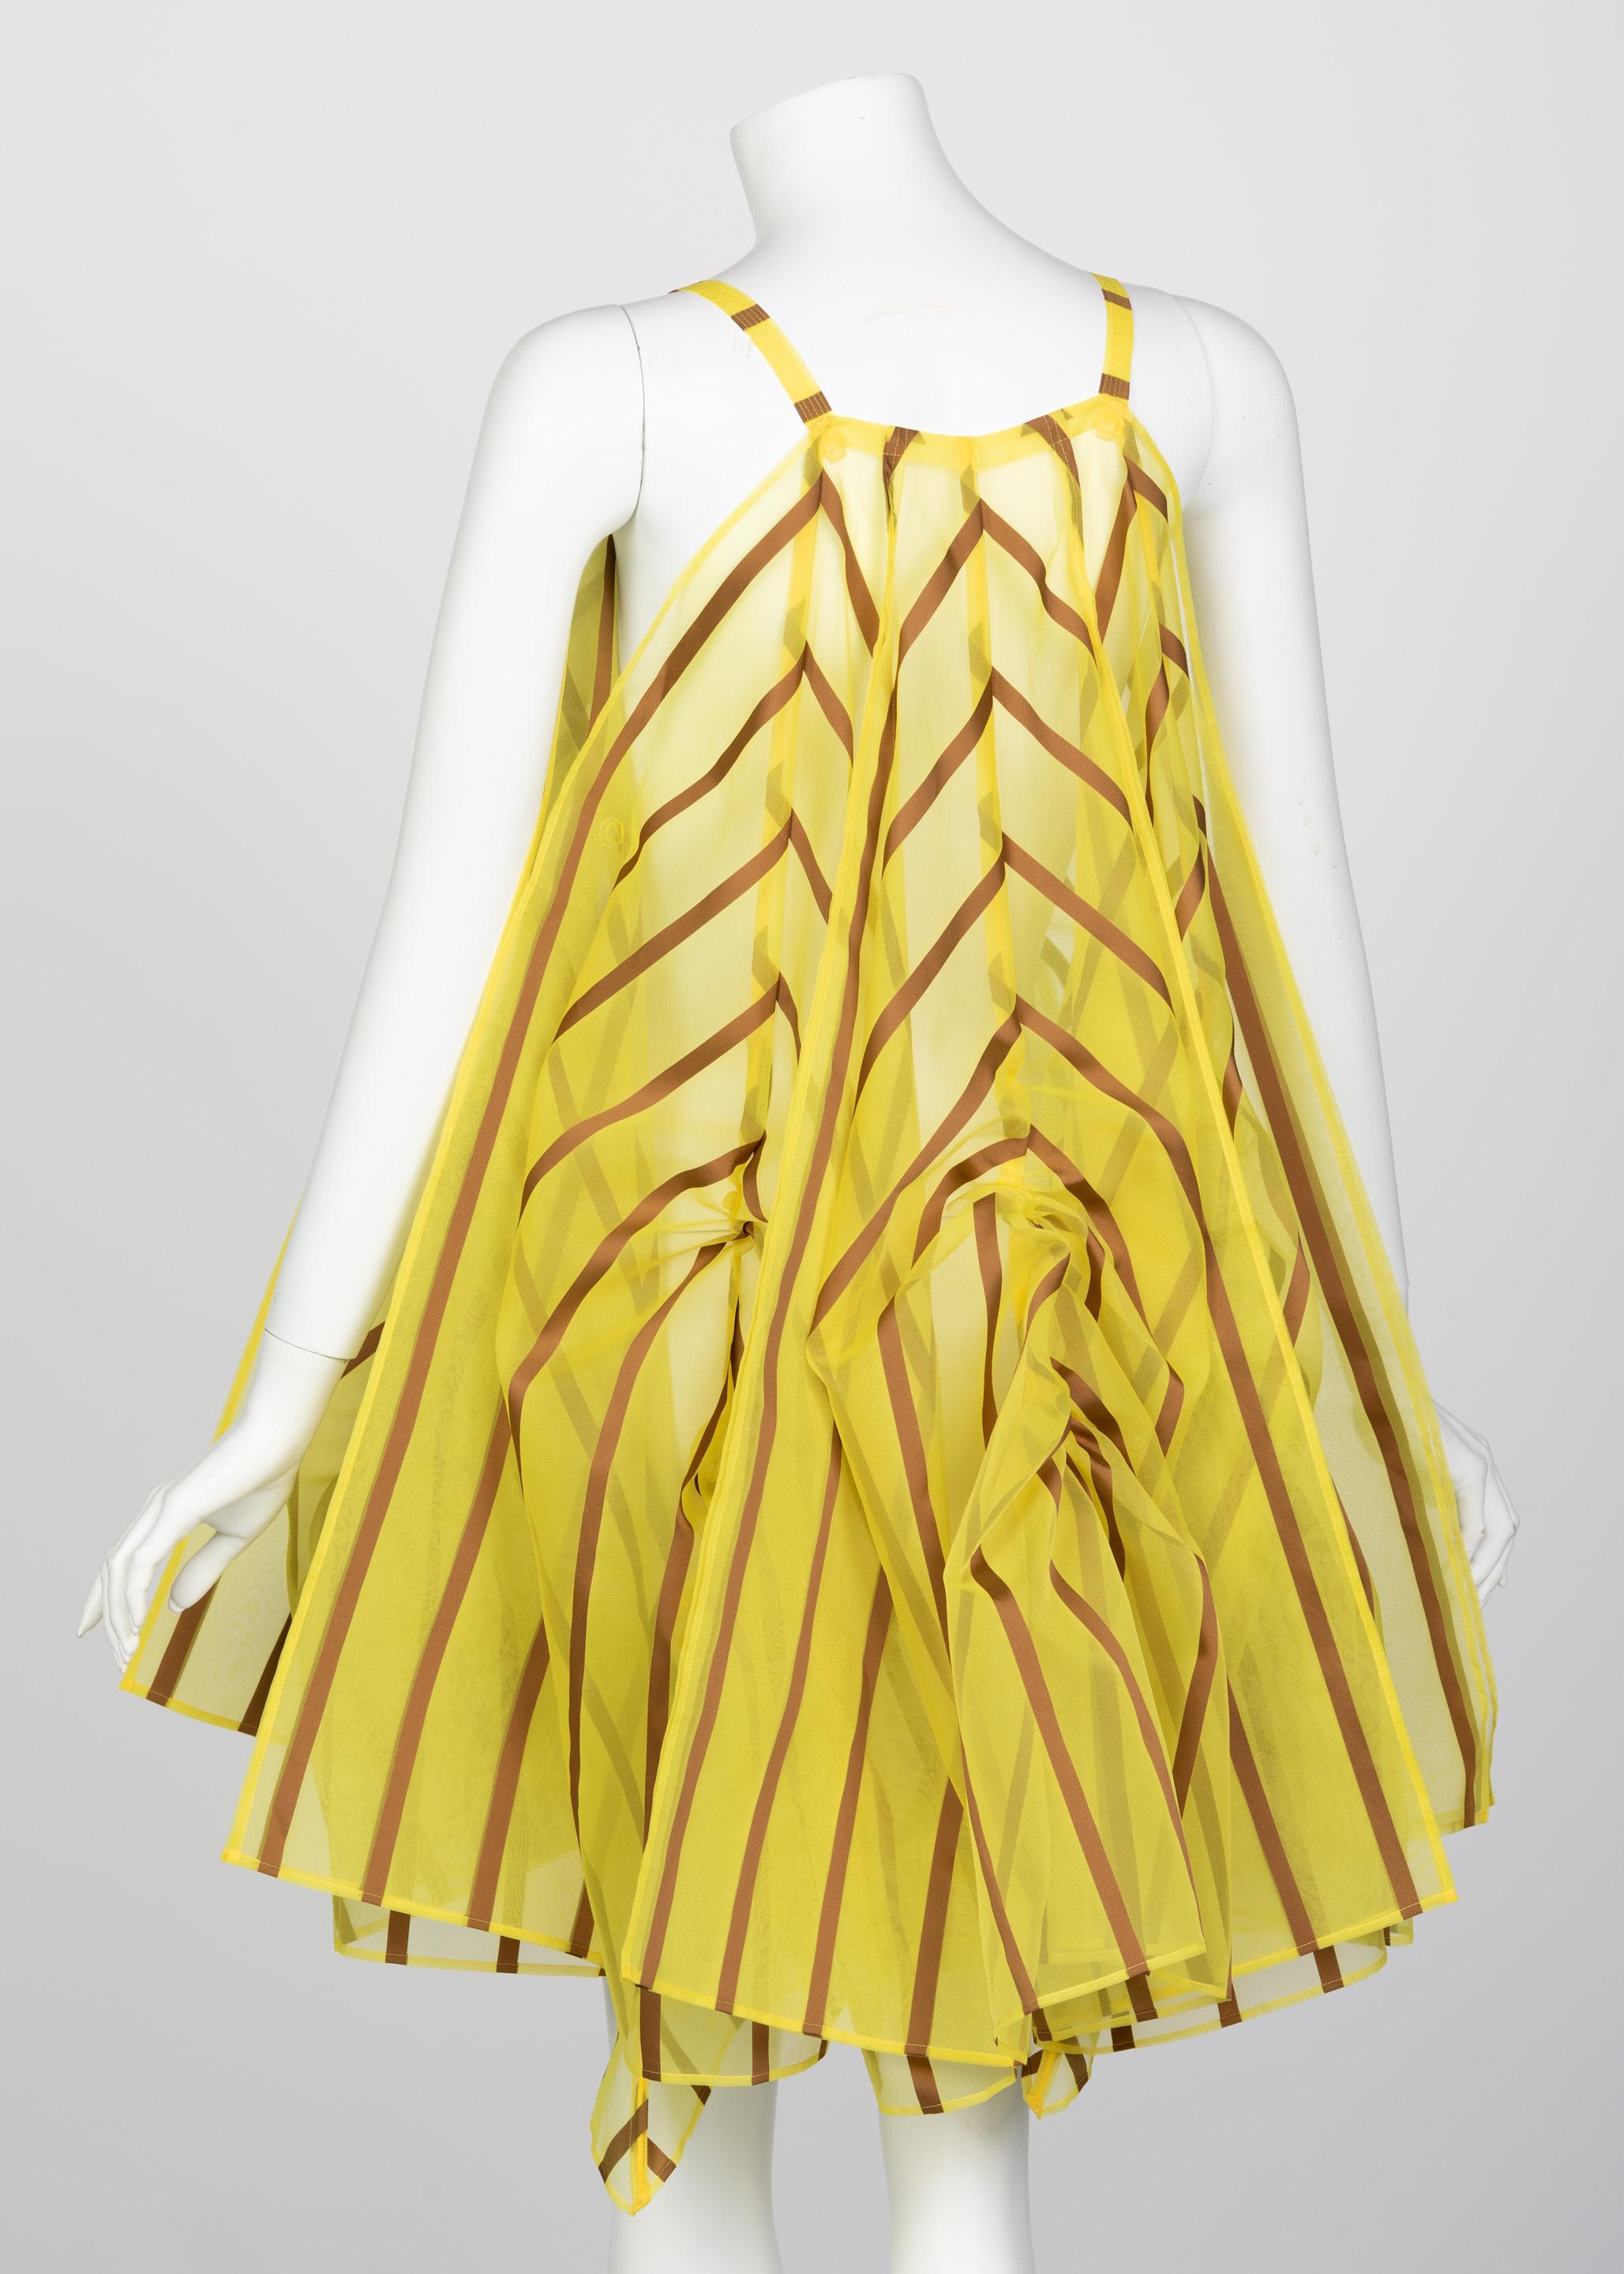 Issey Miyake Yellow Organza Brown Striped Handkerchief Dress For Sale 3